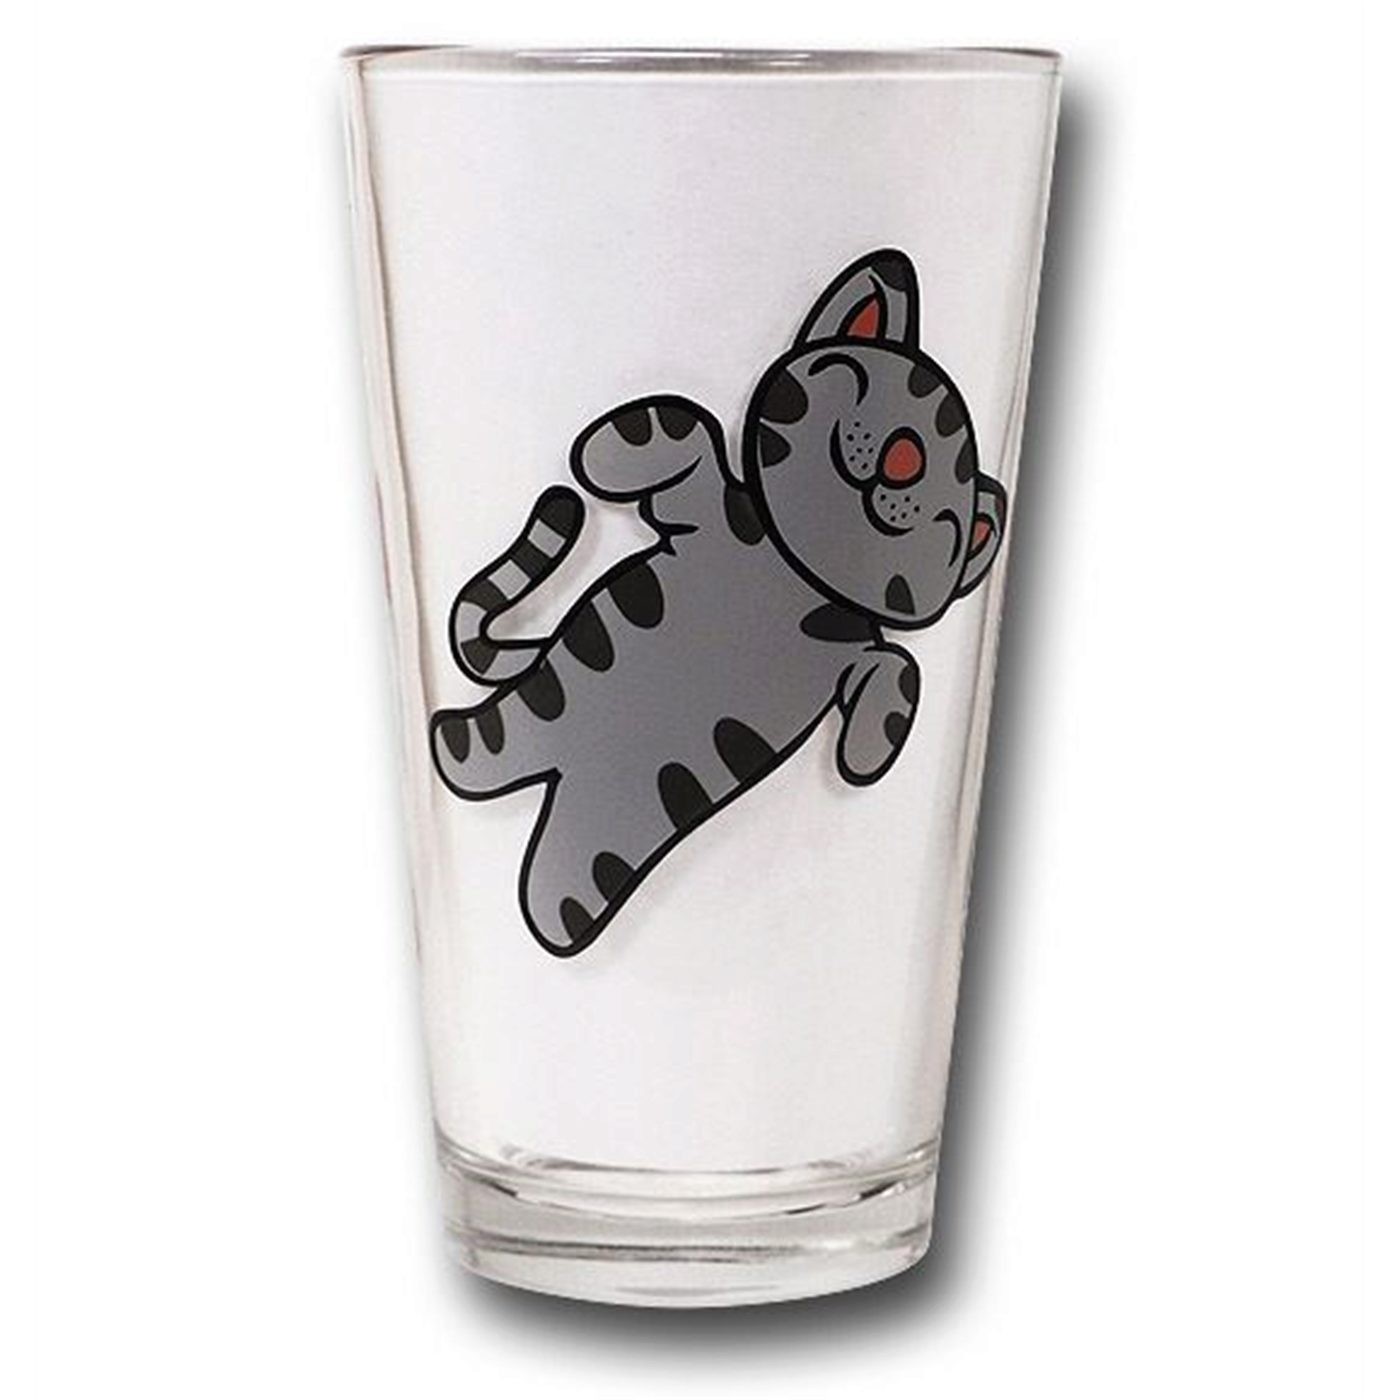 Big Bang Theory Kitty Pint Glass